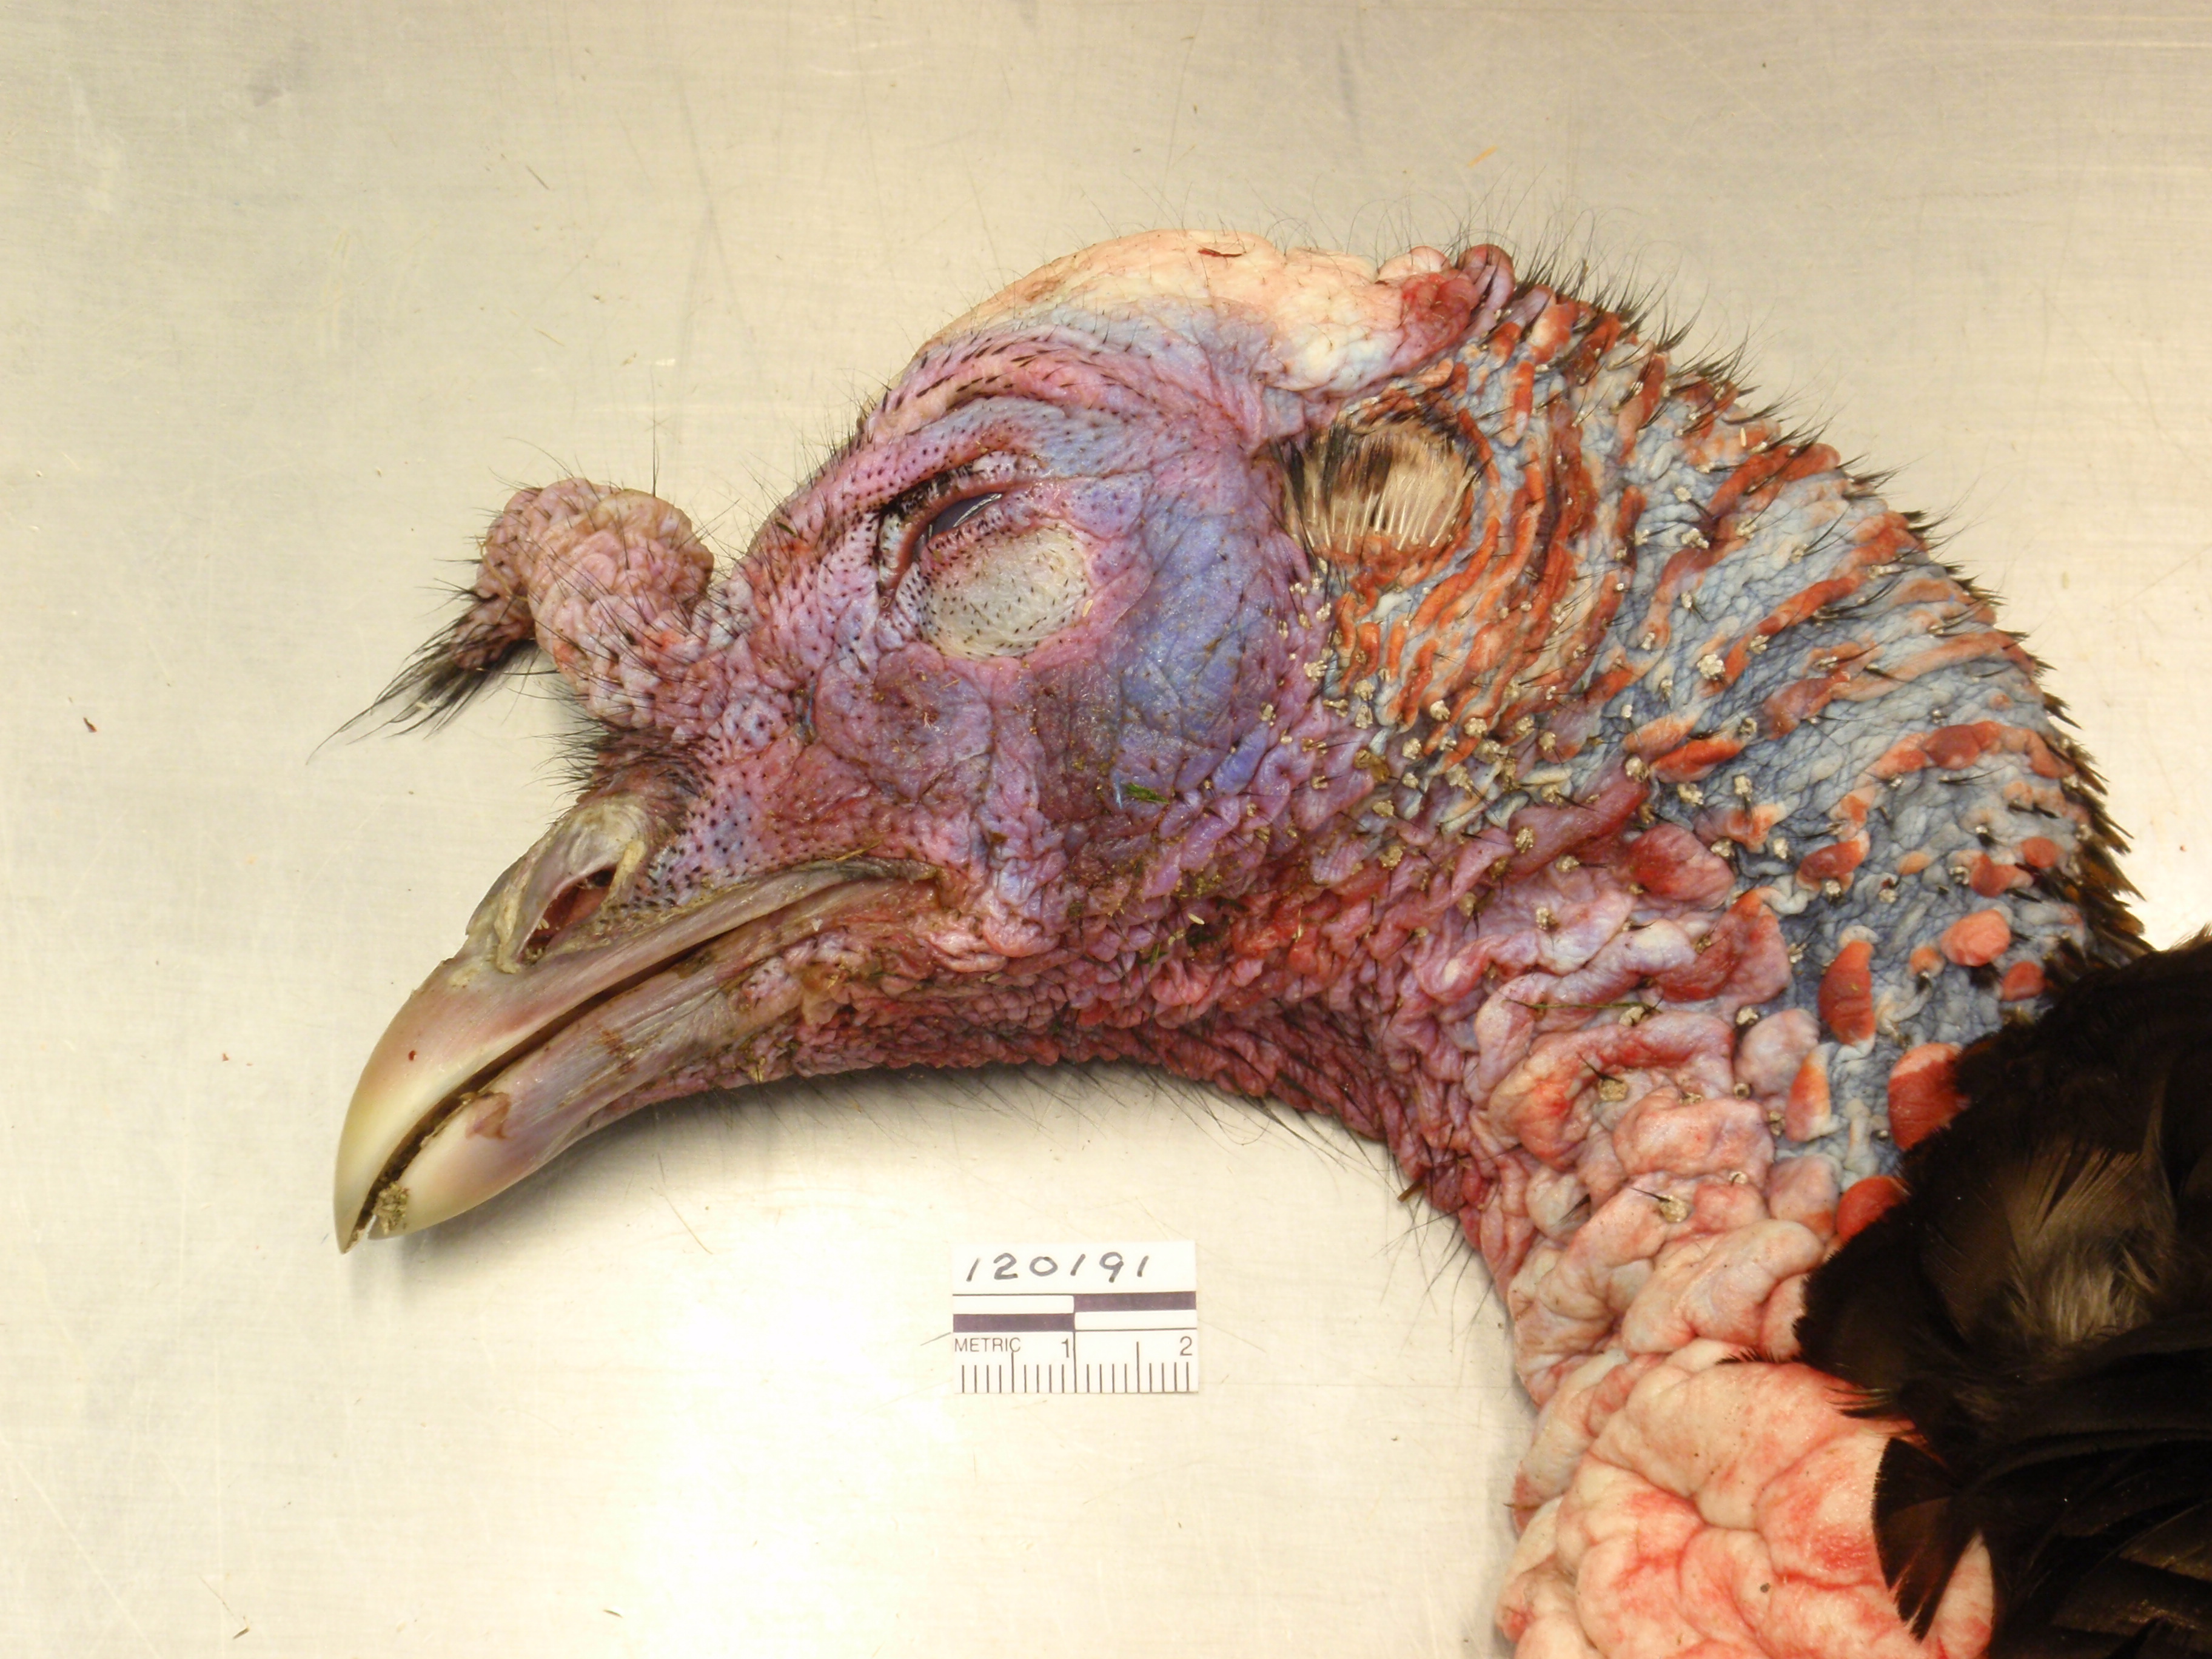 mild case of LPDV infection on a wild turkey